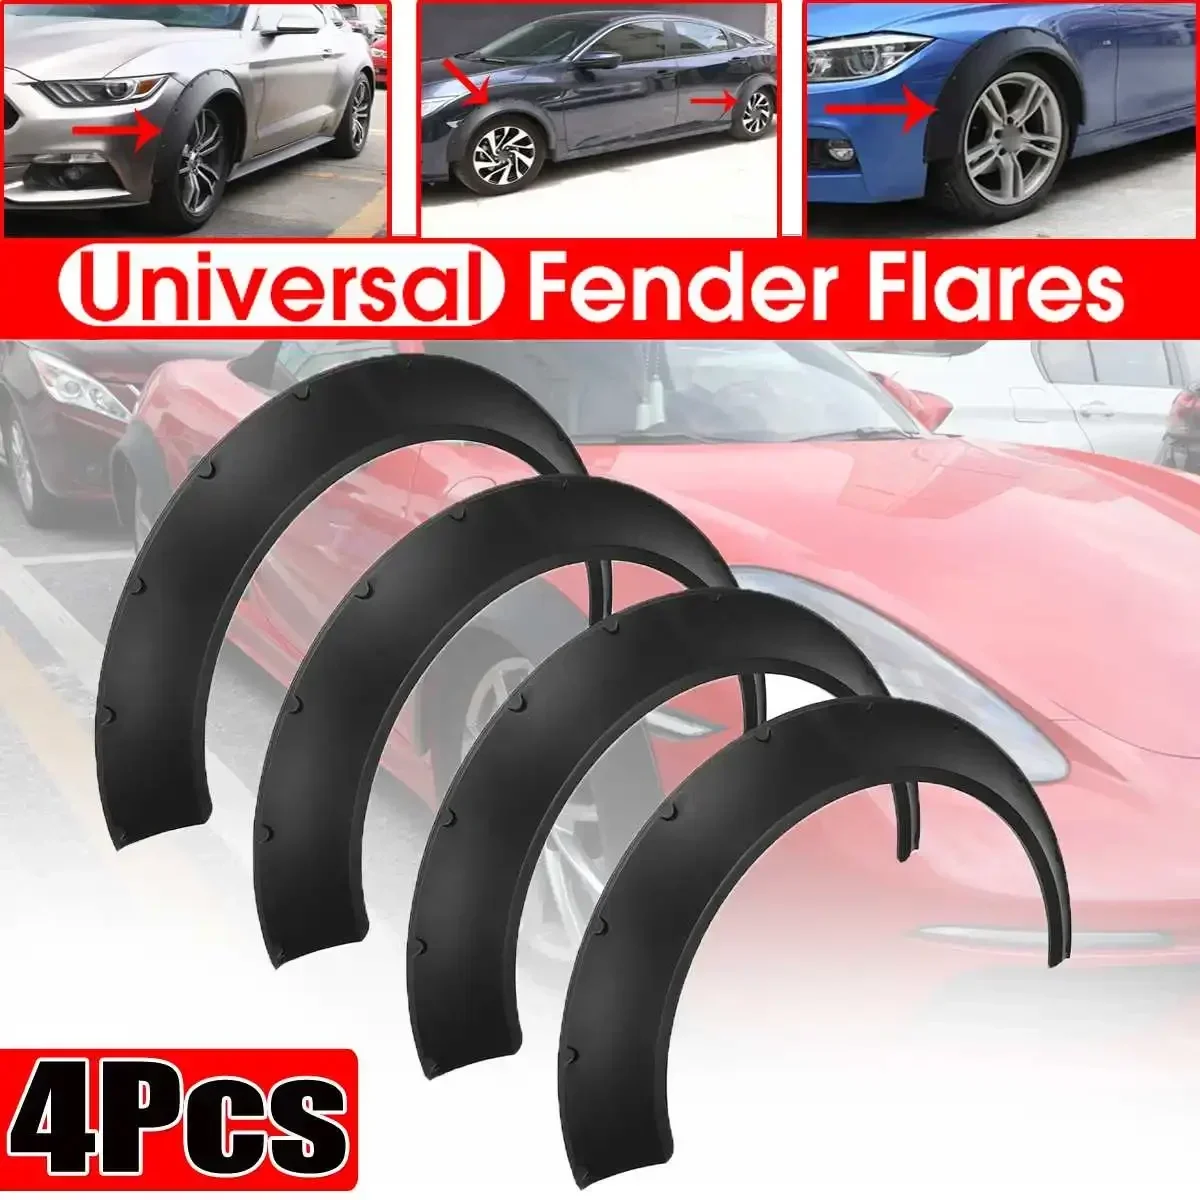 

4x Flexible Universal Car Wide For Fender Flares Wheel Arches For BMW F32 F33 F36 E90 E92 E93 For BENZ W205 W204 W203 Body Kit